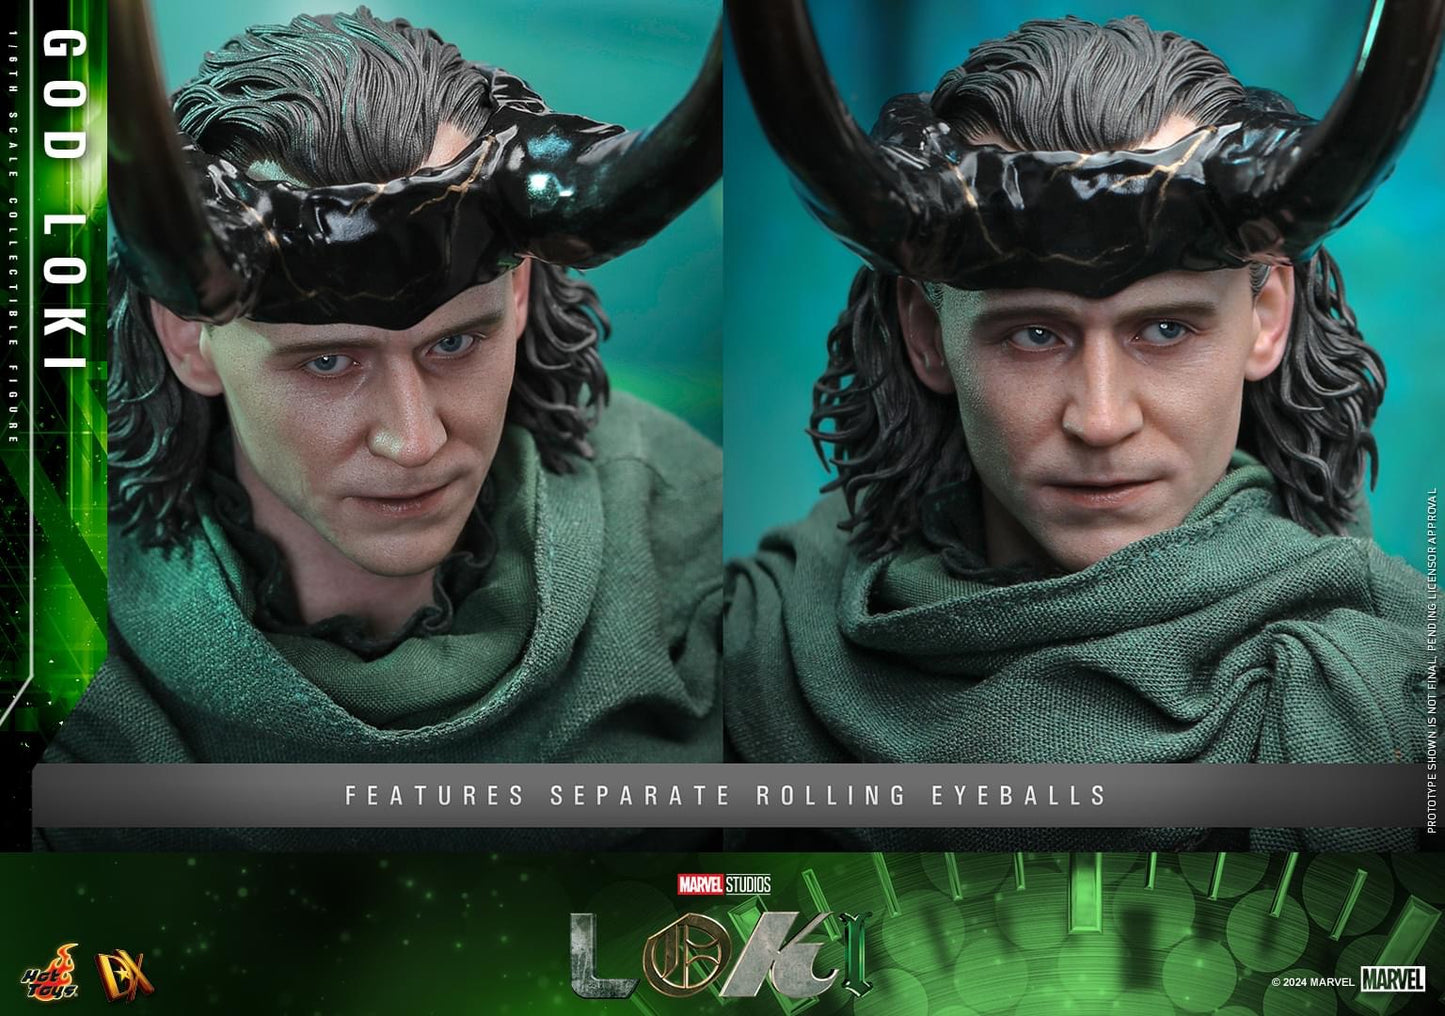 Preventa Figura God Loki - Loki Series marca Hot Toys DX40 escala 1/6